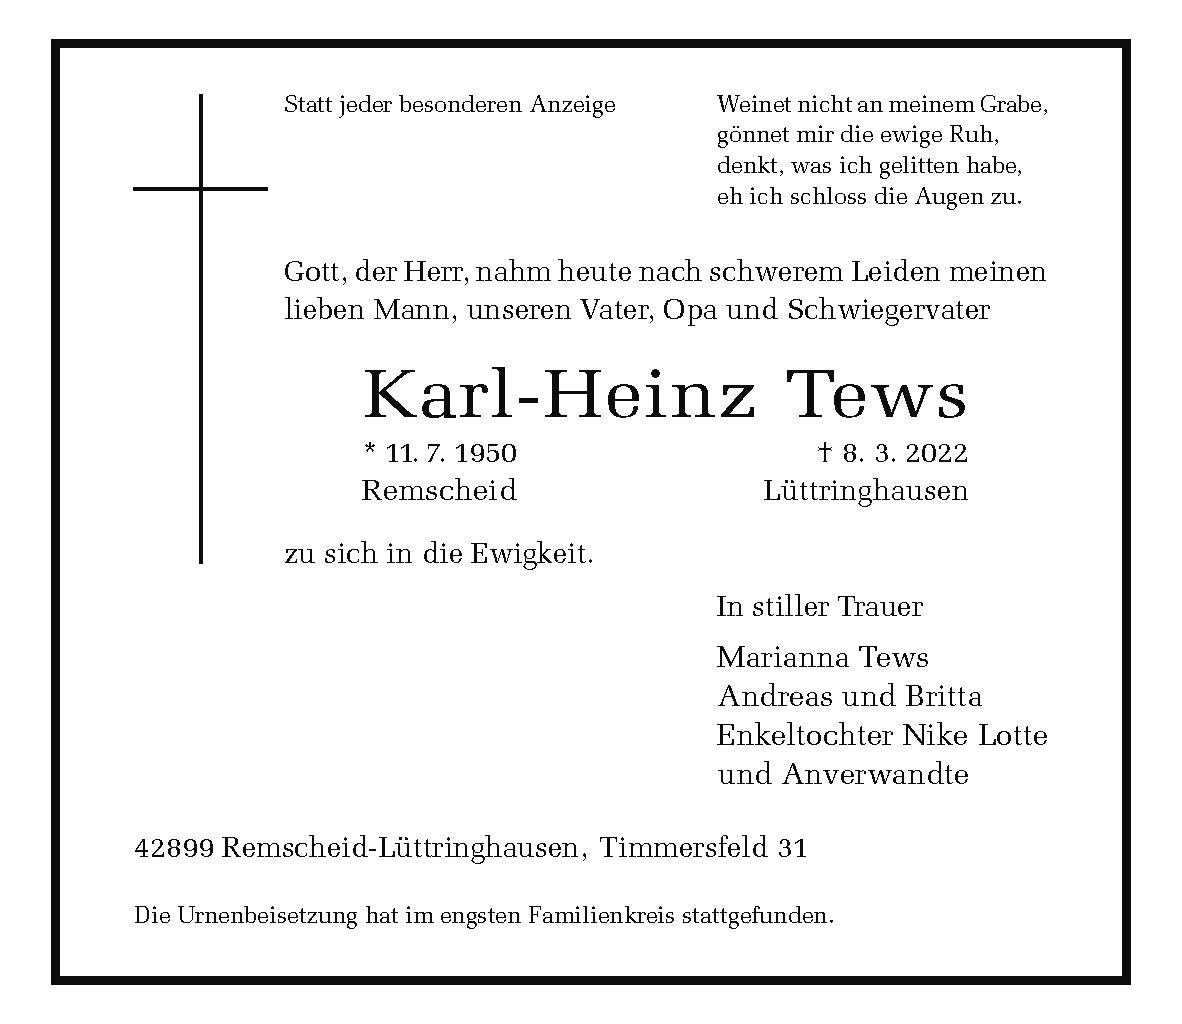 Karl-Heinz Tews